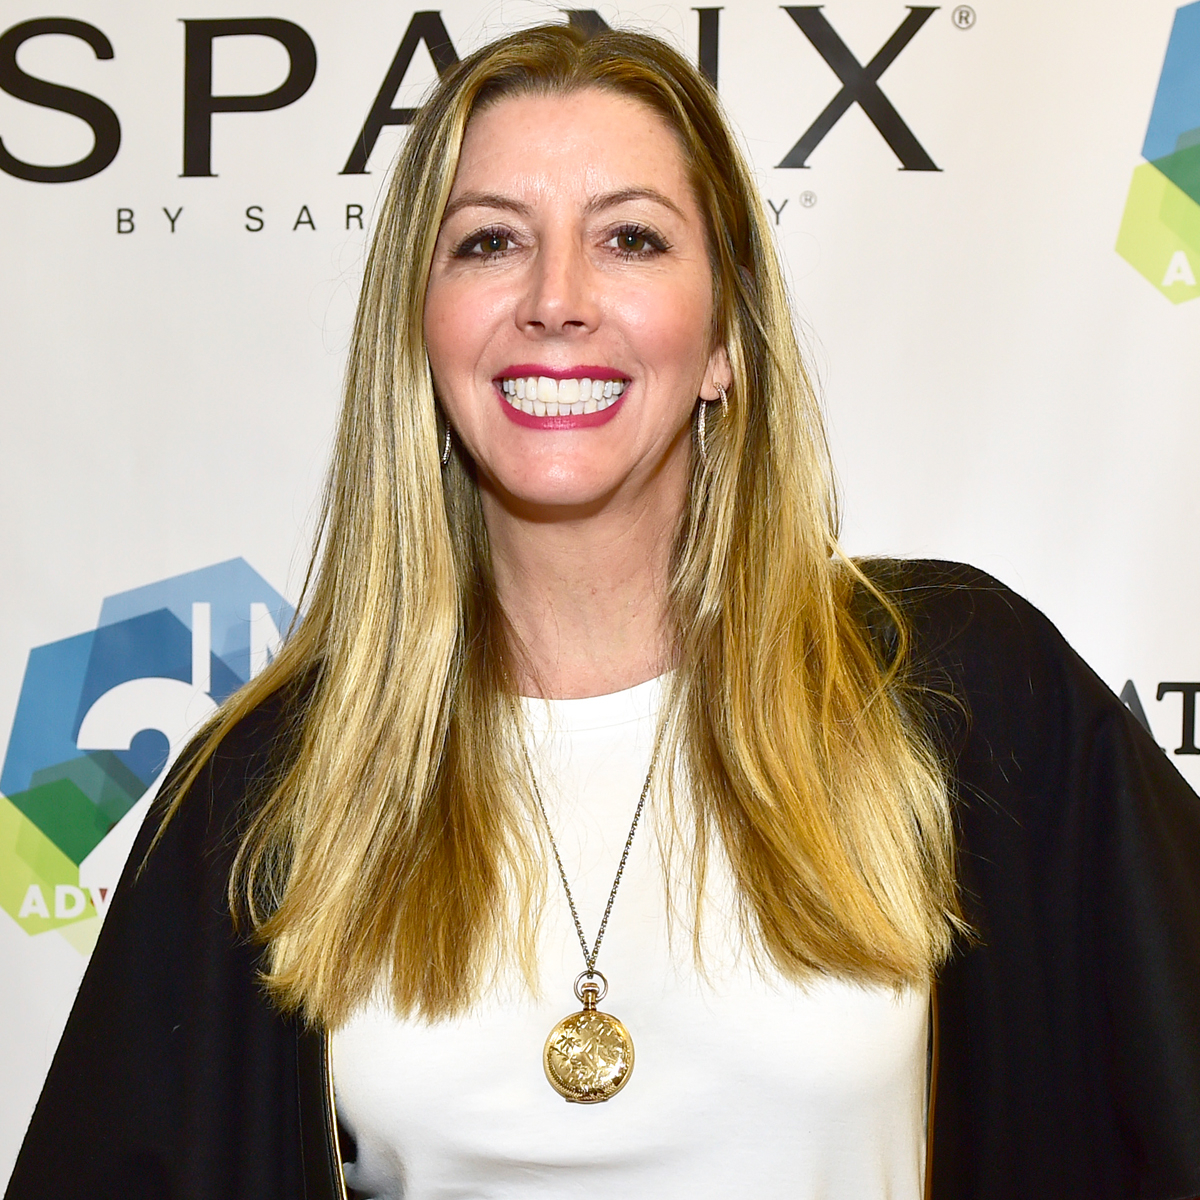 Spanx puts Sara Blakeley on world billionaire list